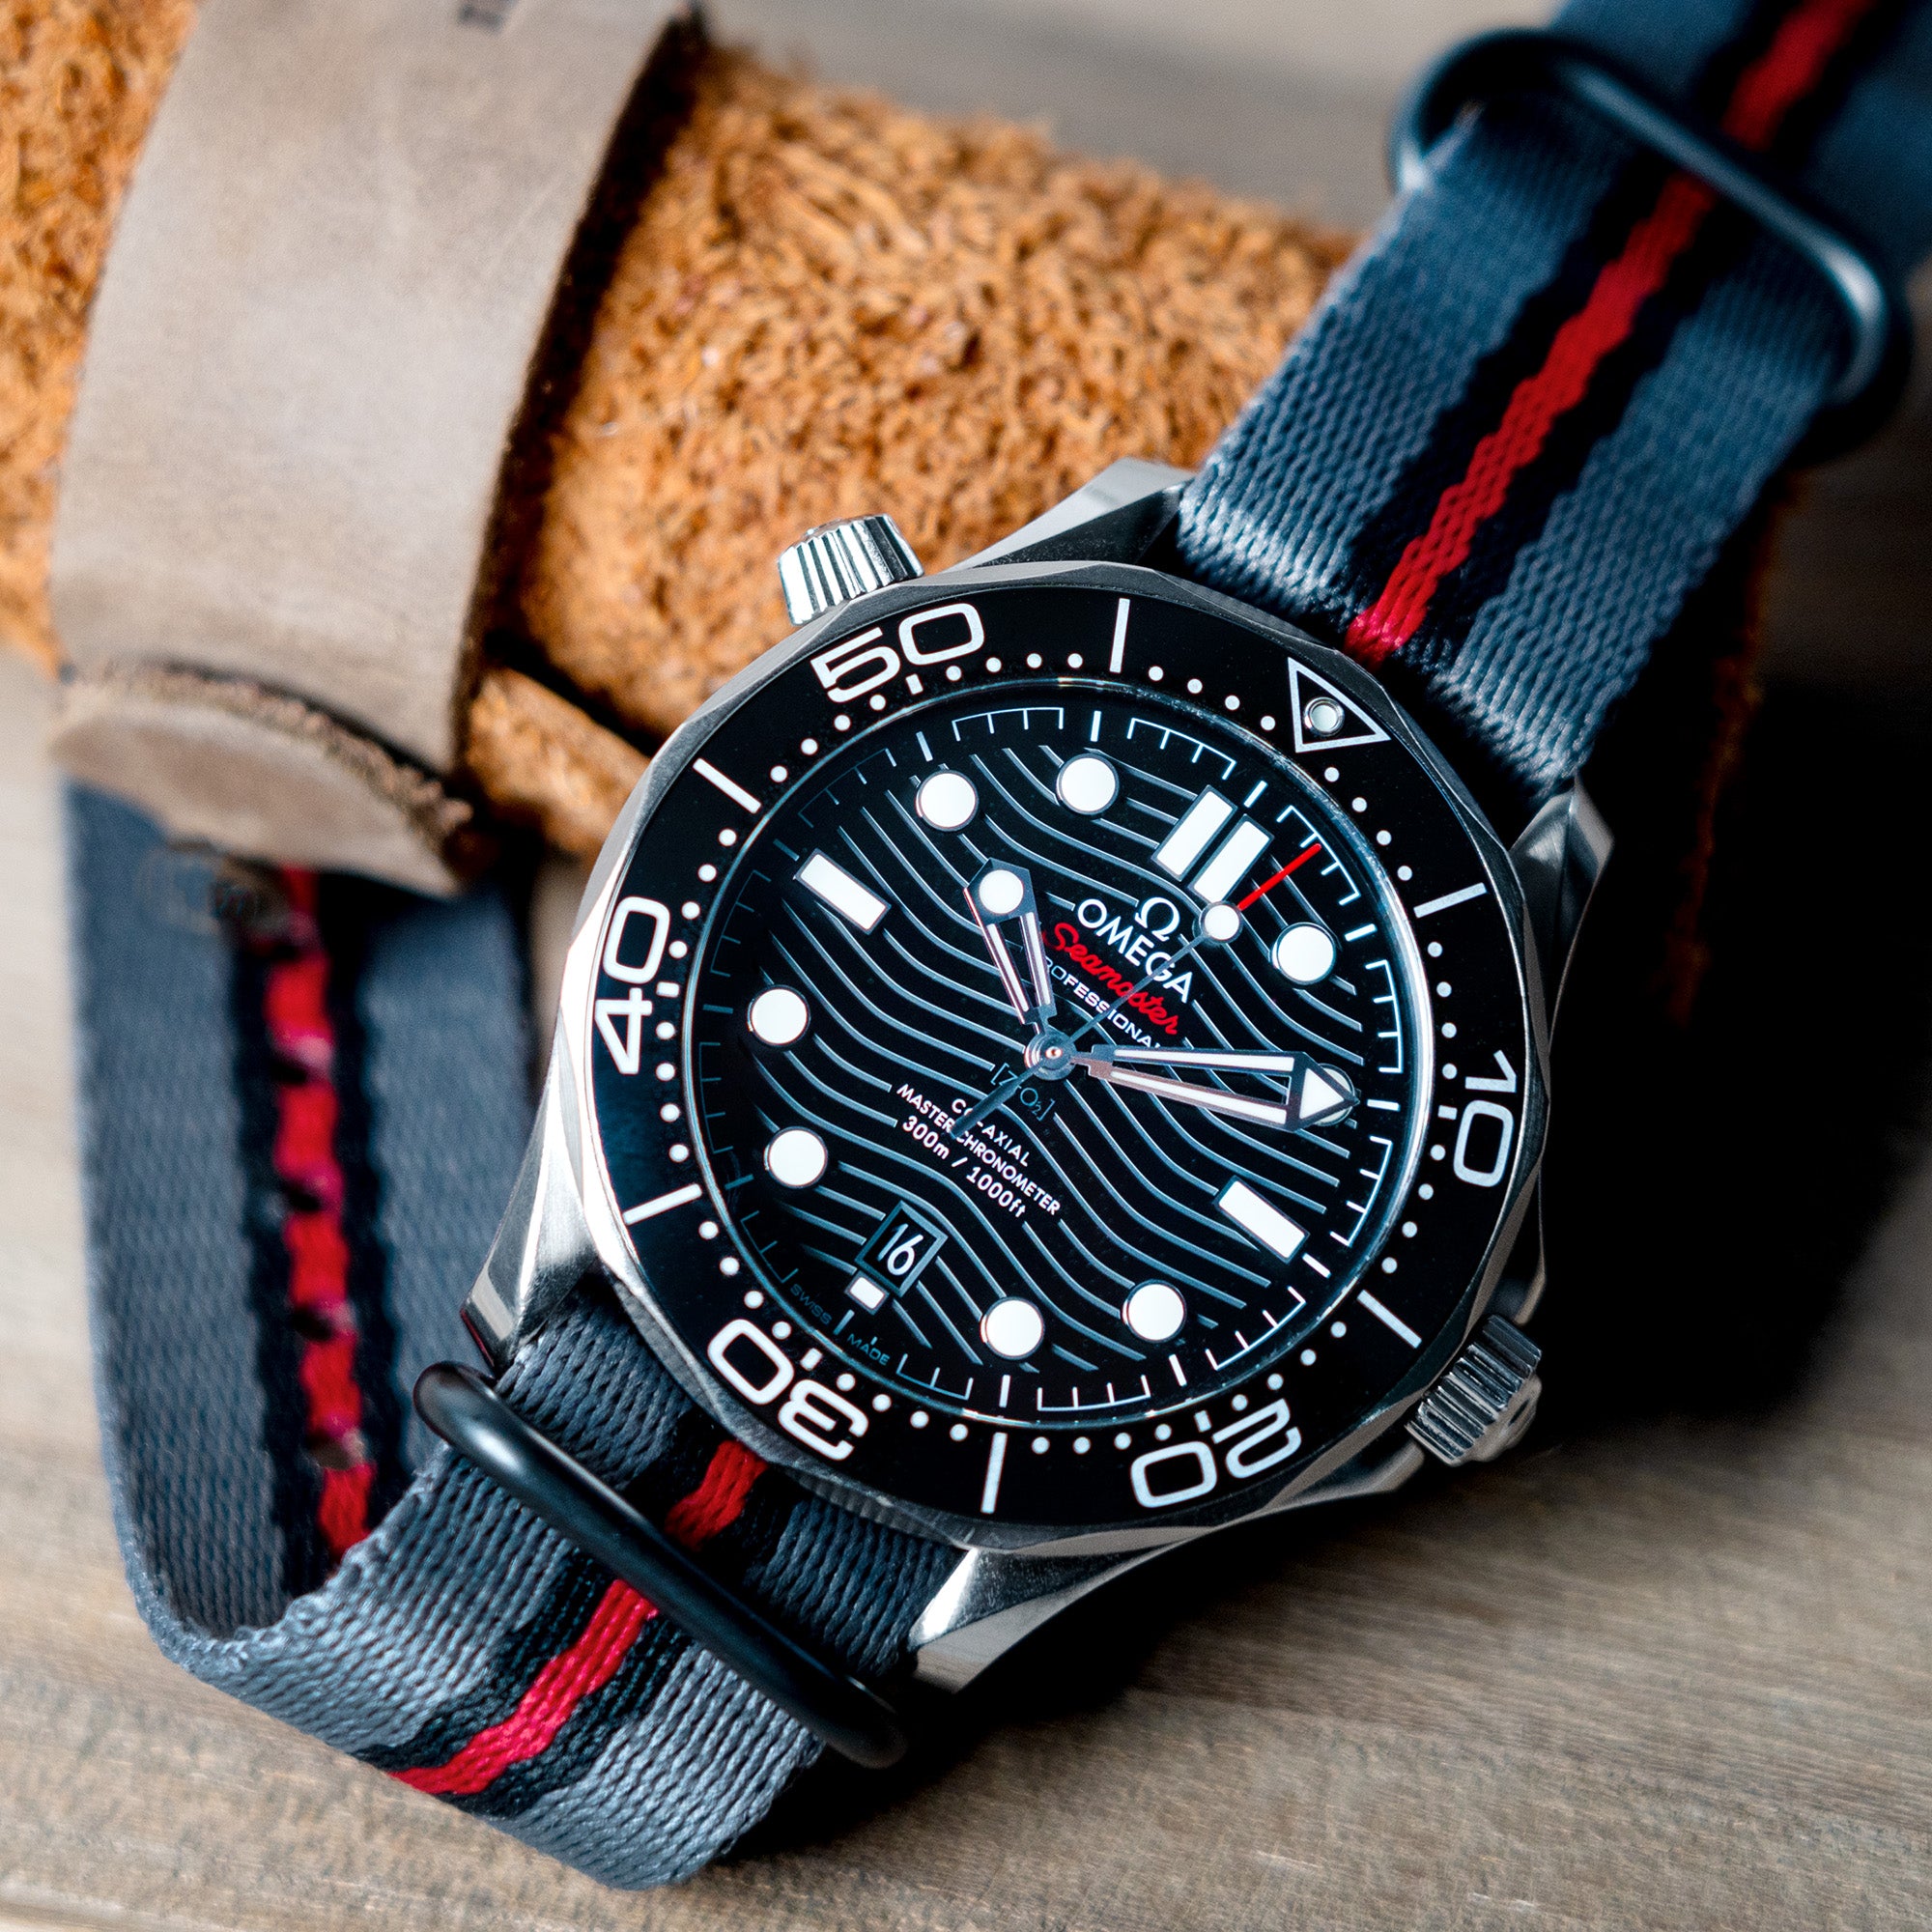 MiLTAT 20mm G10 watch strap ballistic nylon school look armband - Grey, Black & Red, Brushed